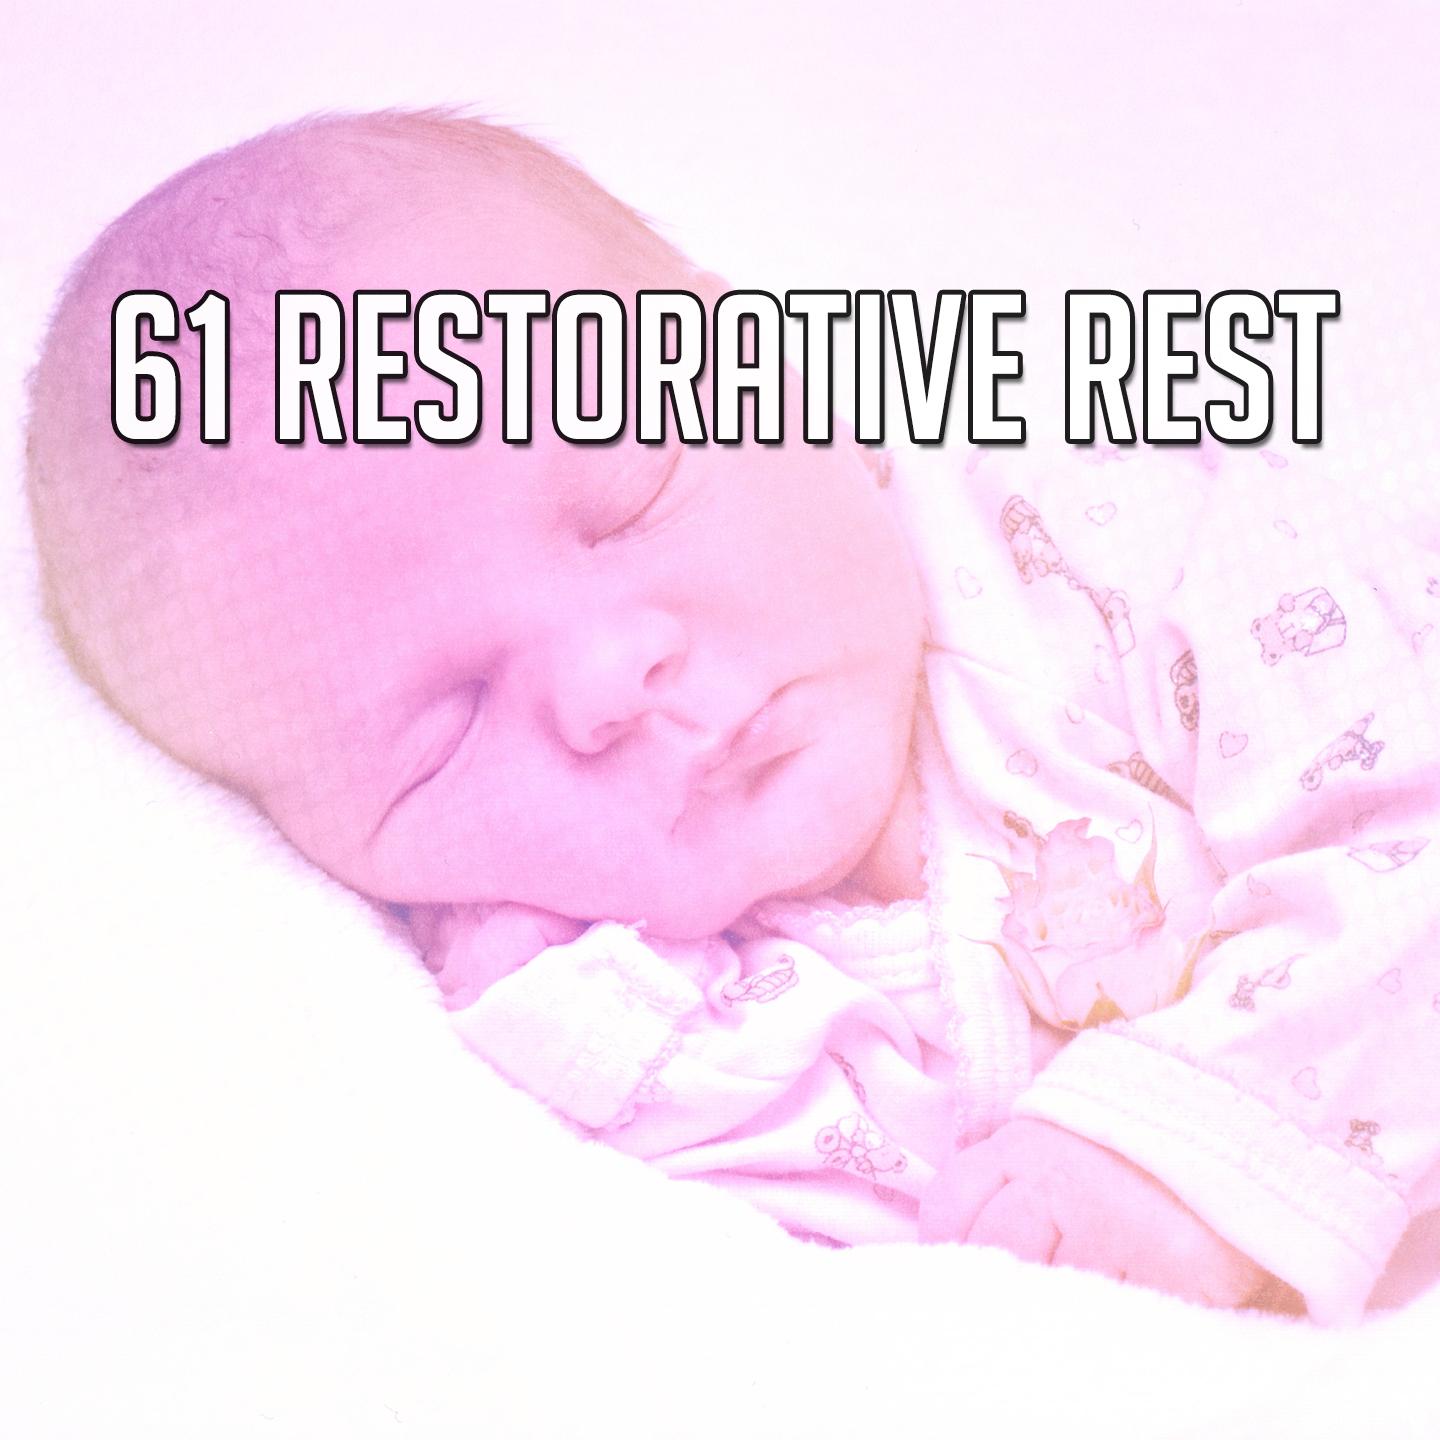 61 Restorative Rest